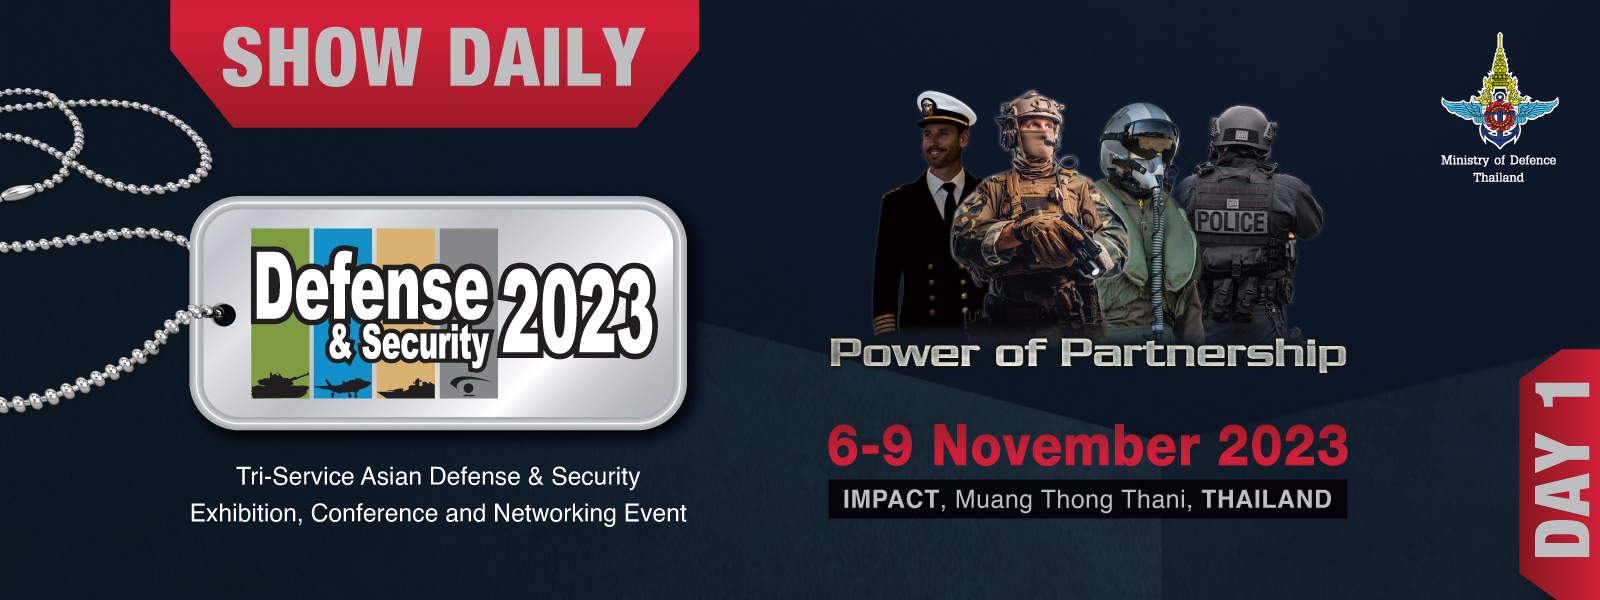 Defense & Security 2023 Official E-Newsletter Header